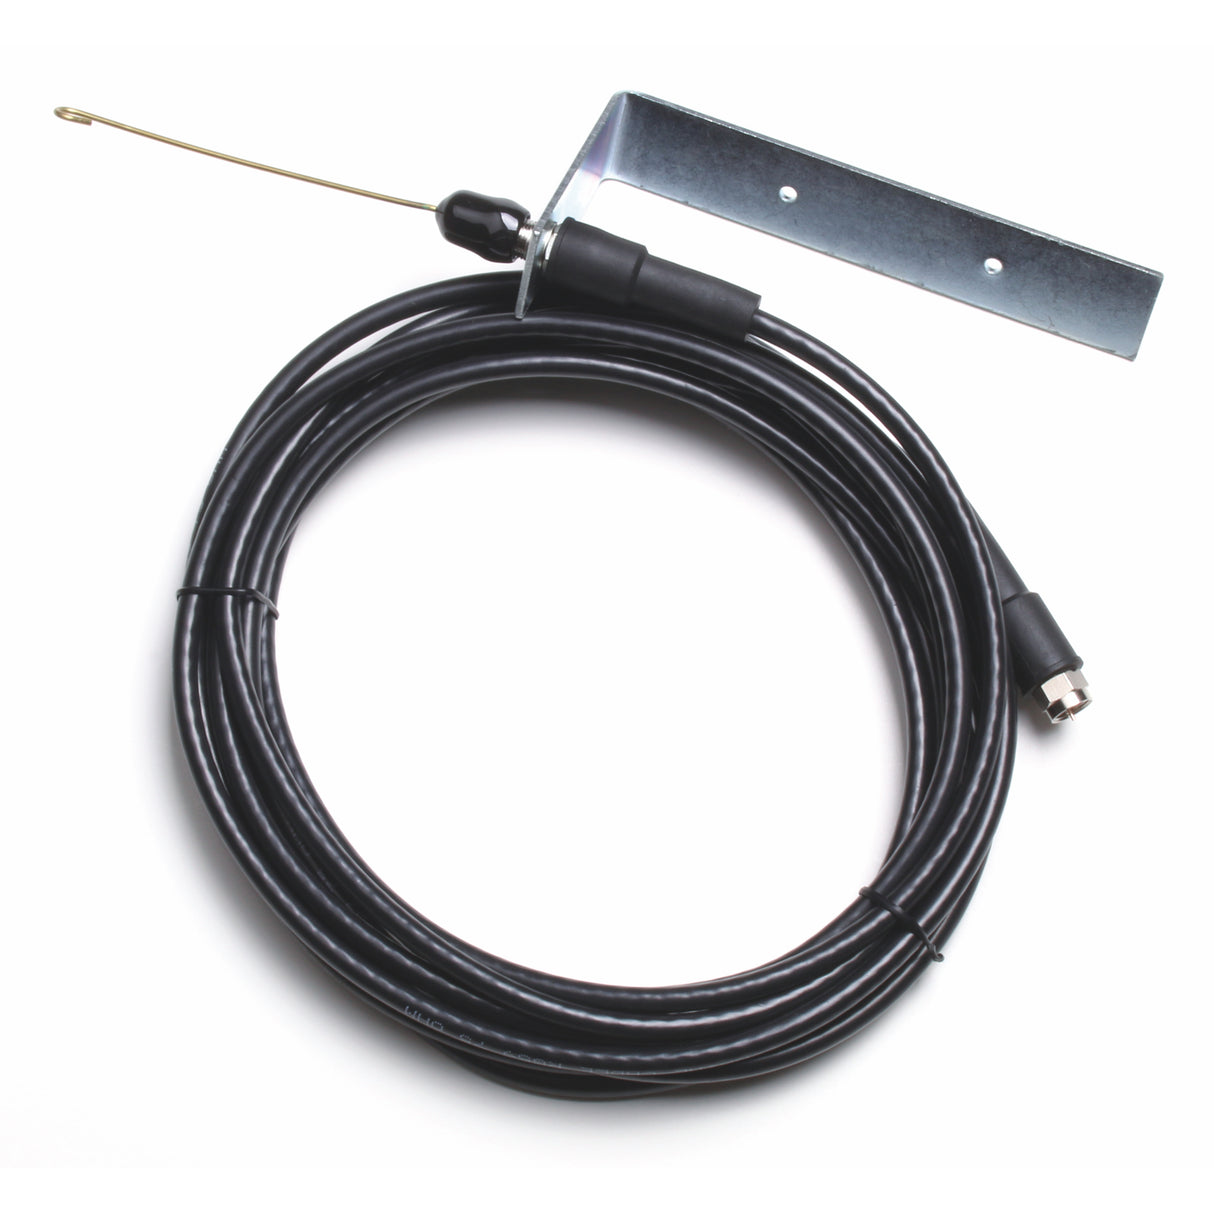 Digi-Code DC5165 Coaxial Cable Antenna Extension (433Mhz)